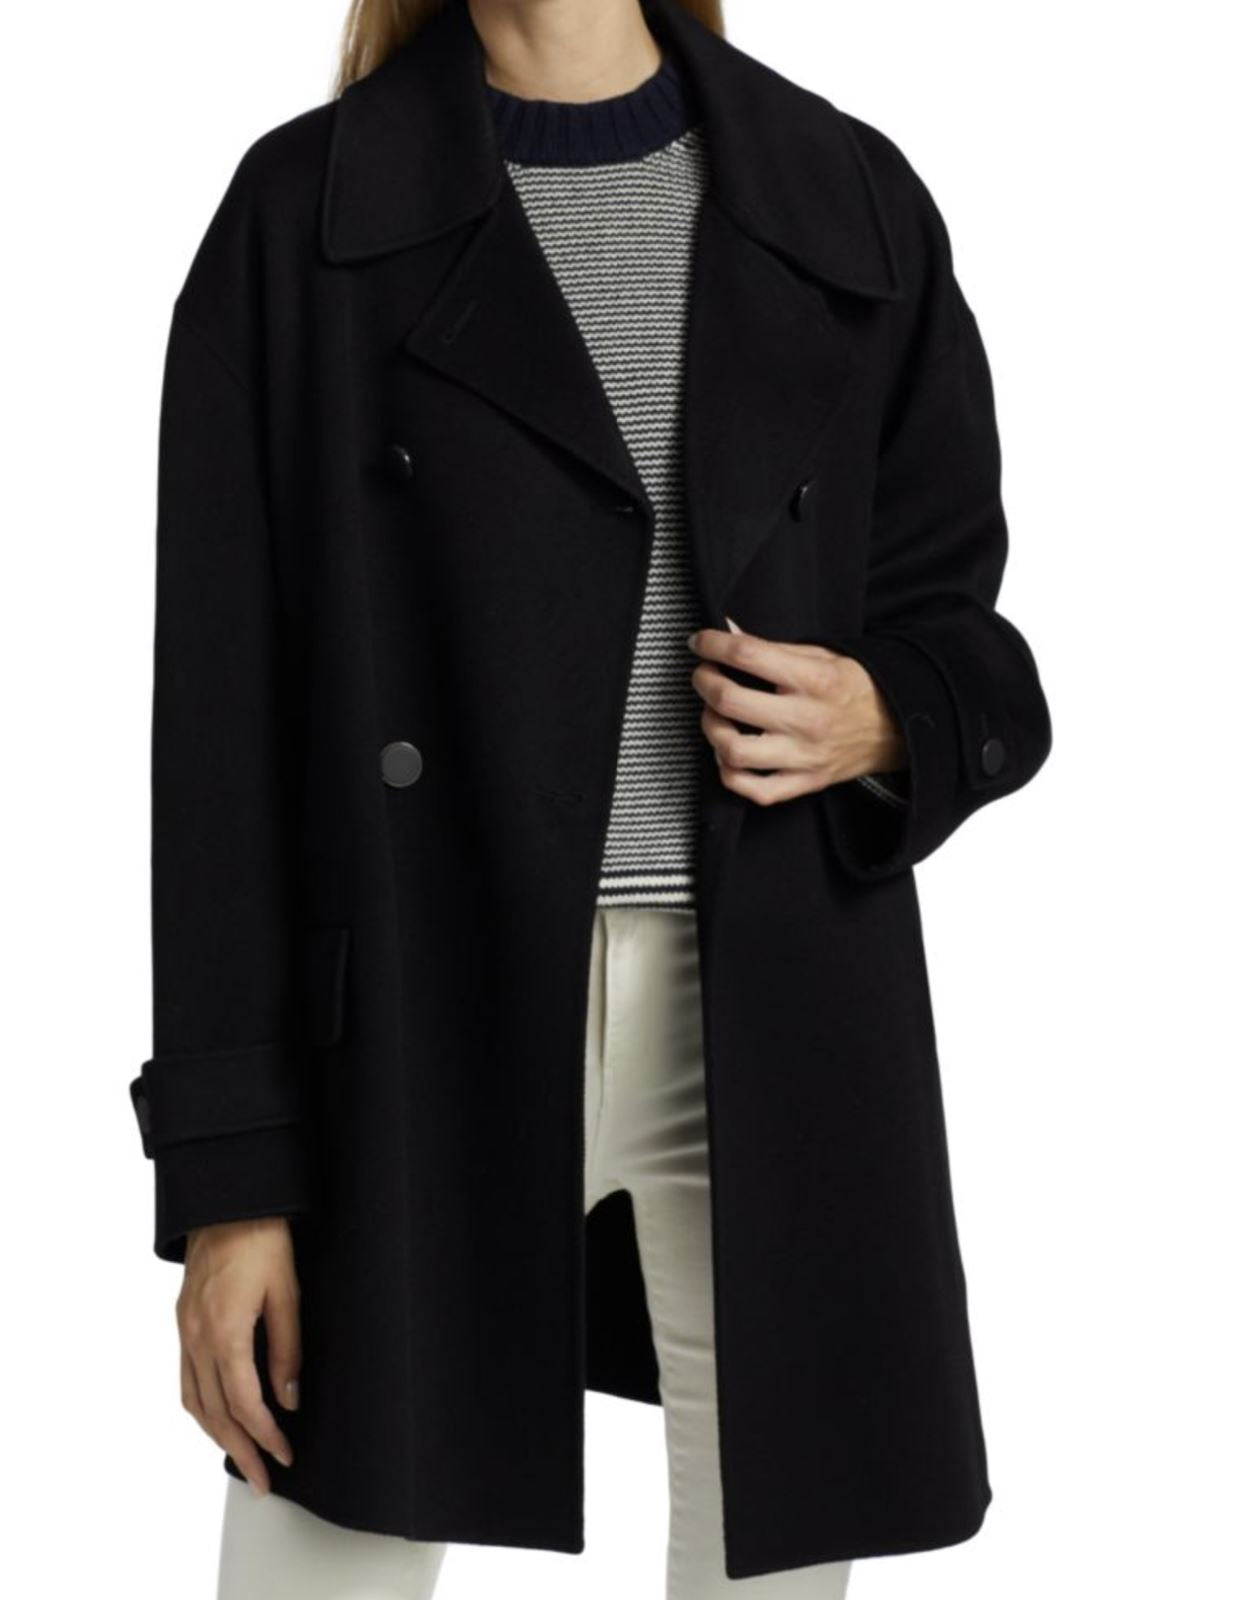 NWT $8085 Loro Piana Women's Cashmere Coat Black 40 Euro Made in Italy